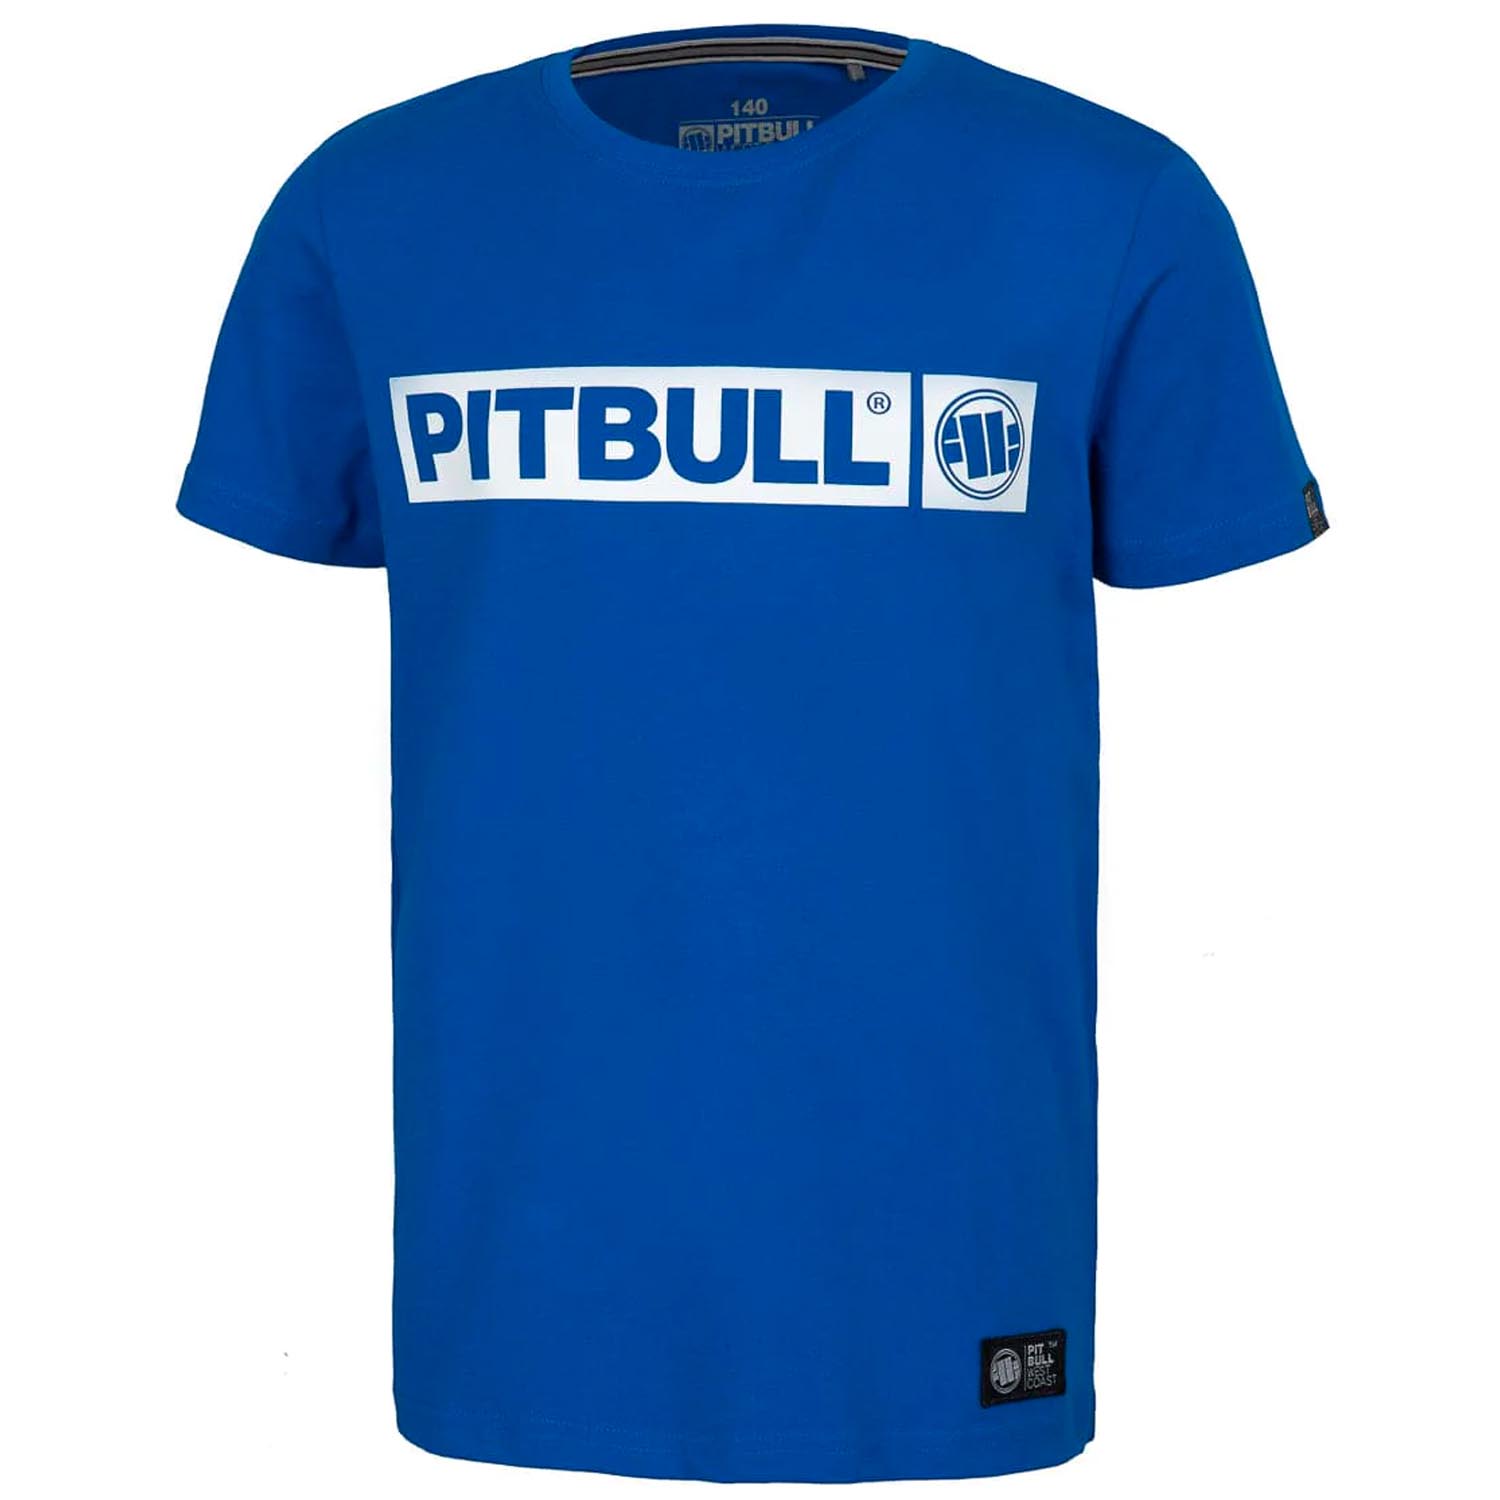 Pit Bull West Coast T-Shirt, Kids, Hilltop, blue, 128